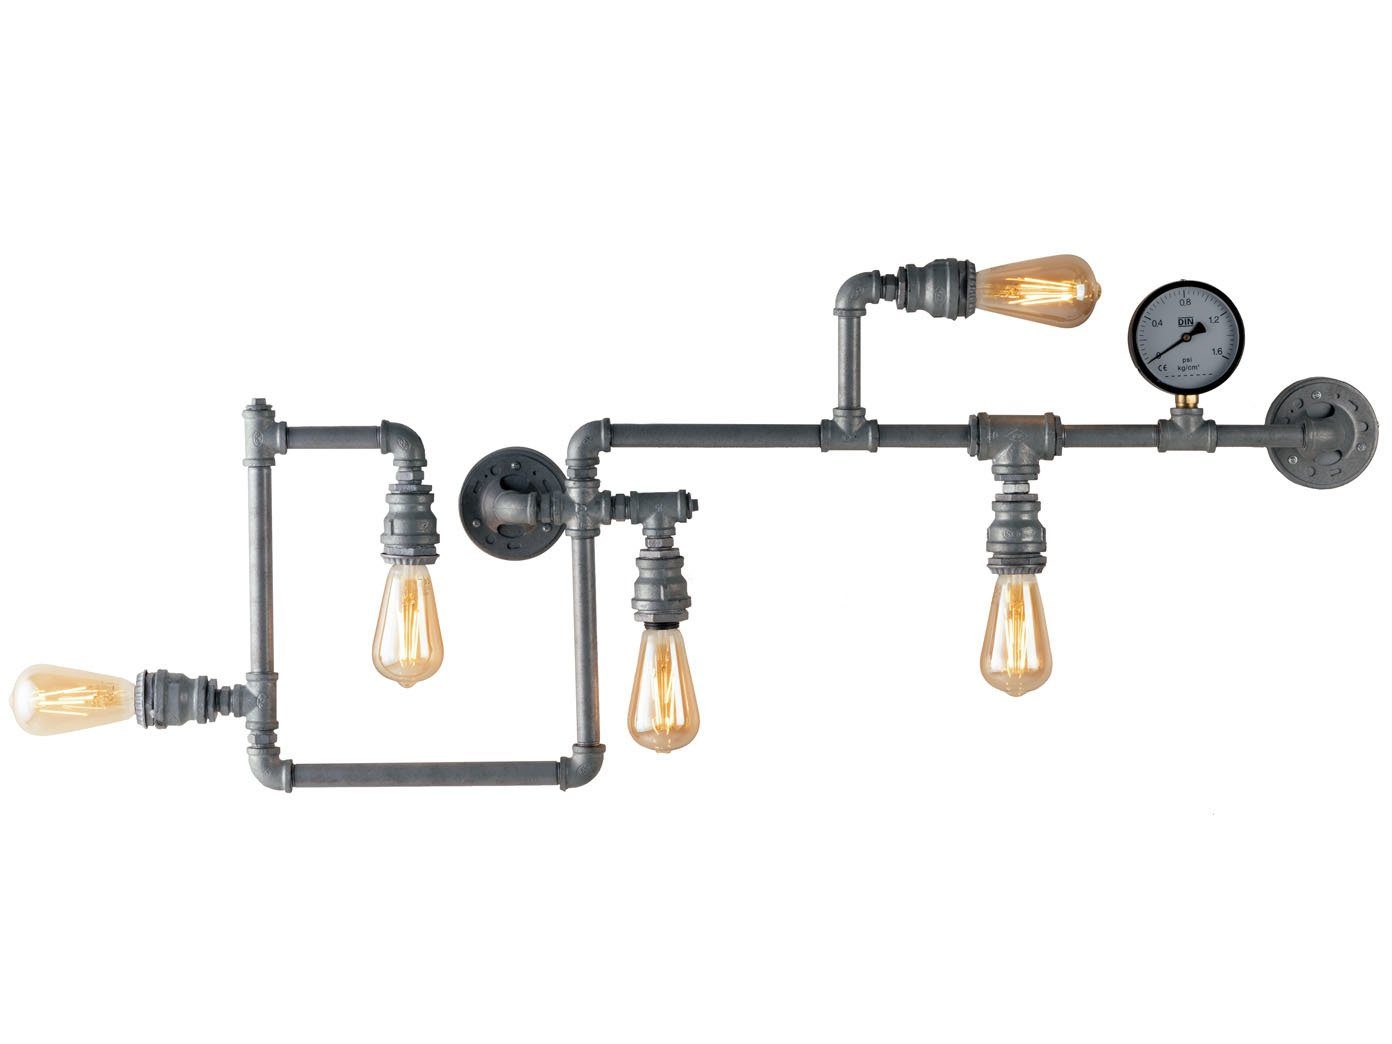 LUCE Design LED Wandleuchte, LED Industrial Lampe wechselbar, ausgefallene Treppenhaus flach innen, antik Grau 114cm grau warmweiß, Rohr